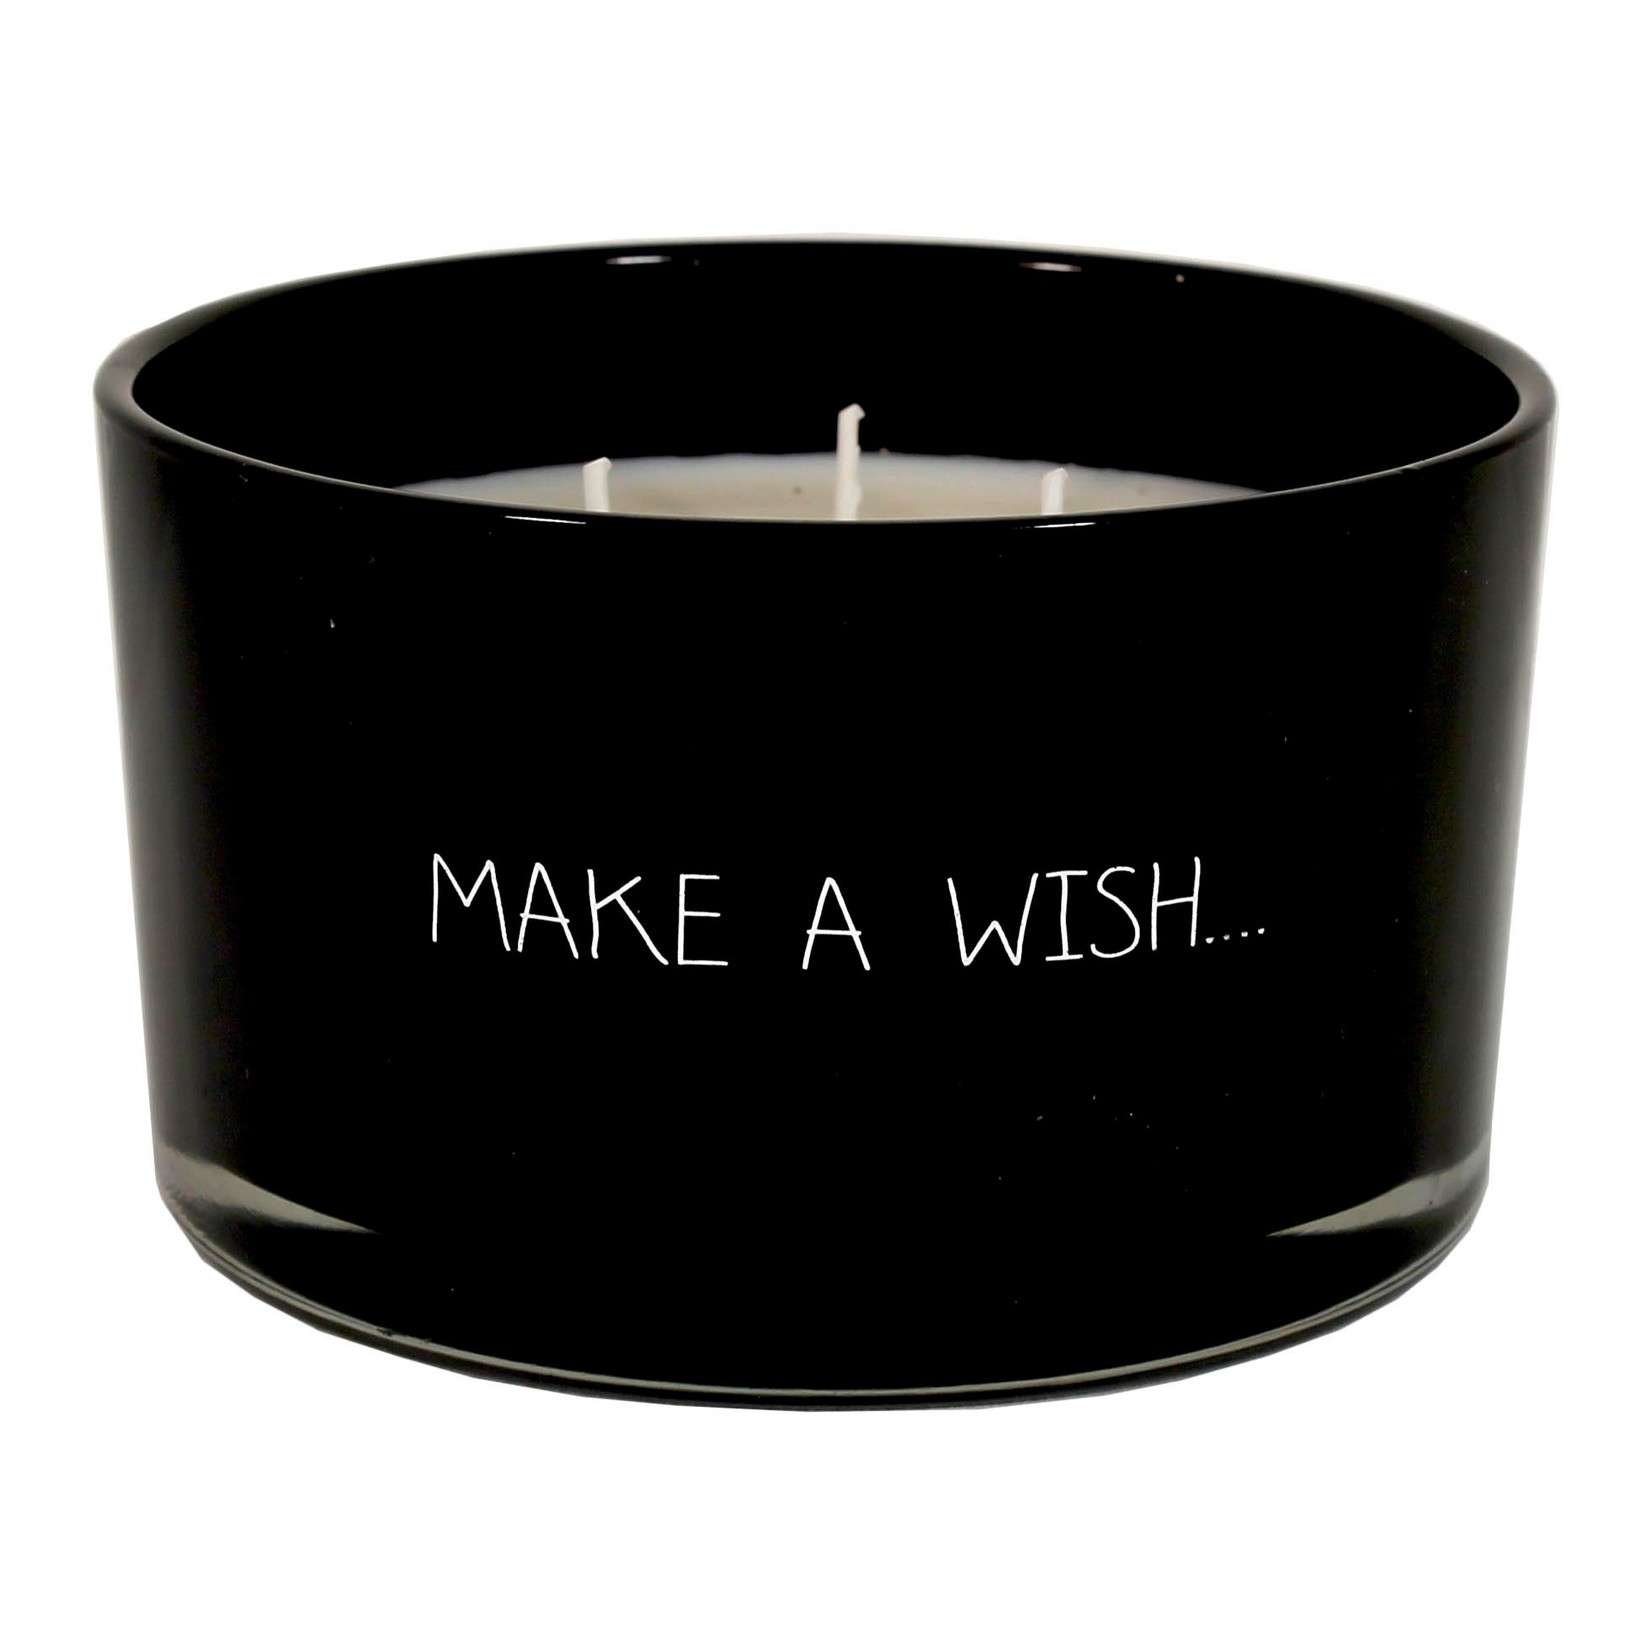 My Flame Sojakaars - Make a wish